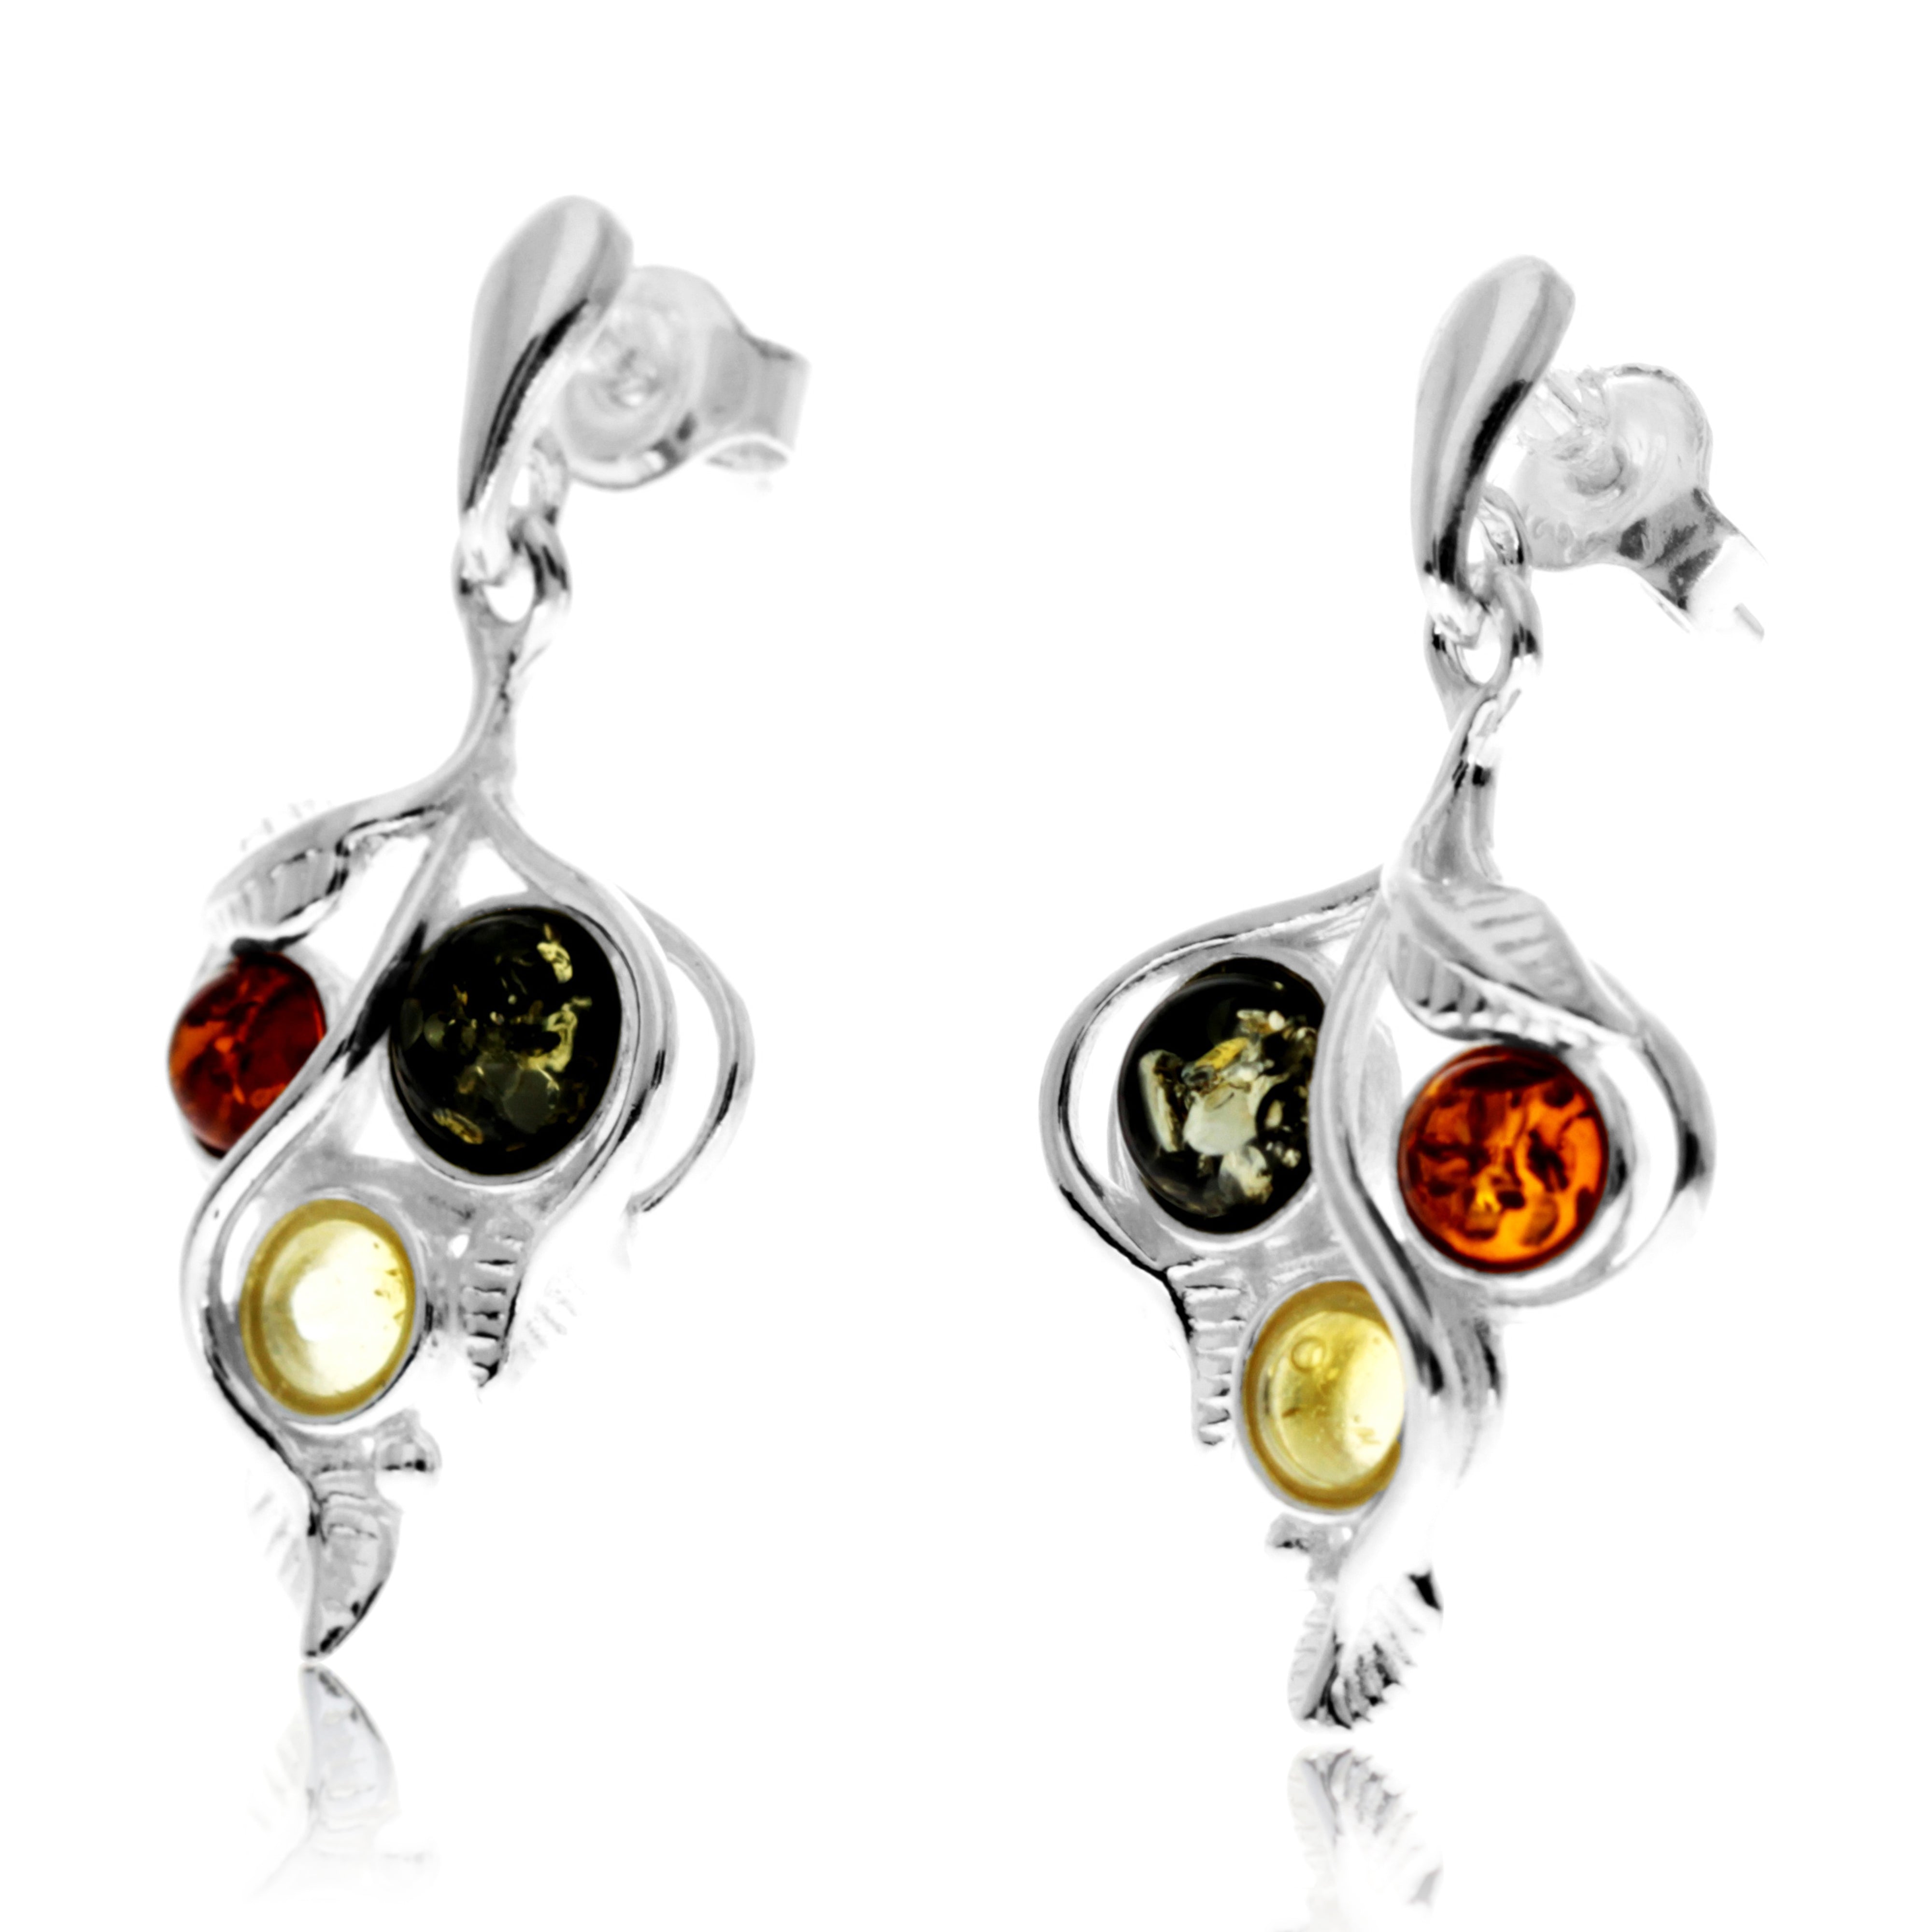 925 Sterling Silver & Genuine Baltic Amber Classic Drop Earrings - GL1030